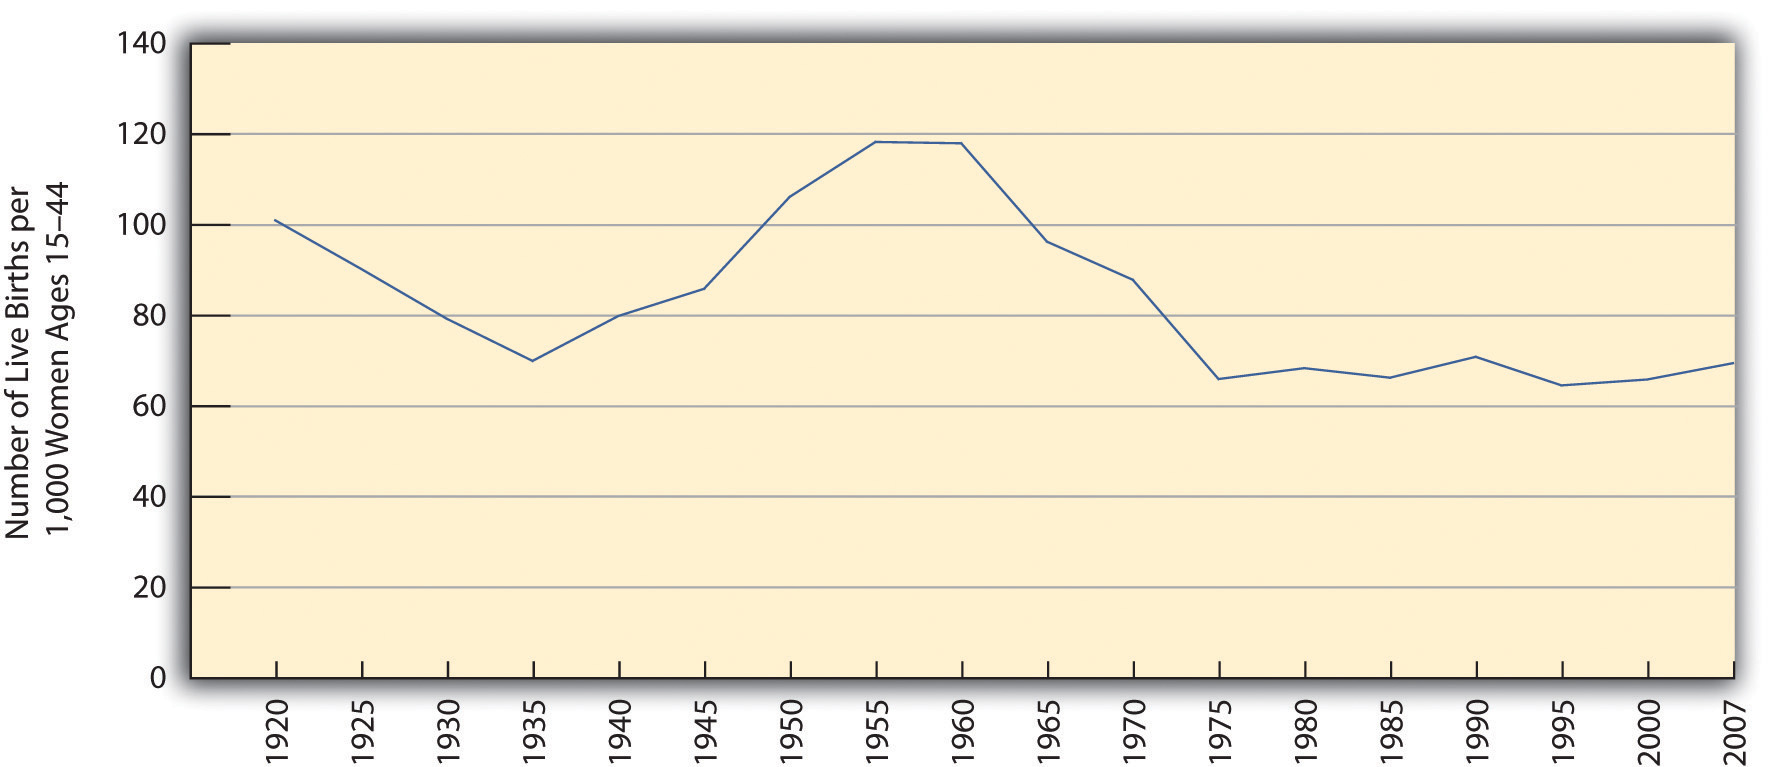 US General Fertility Rate, 1920-2007